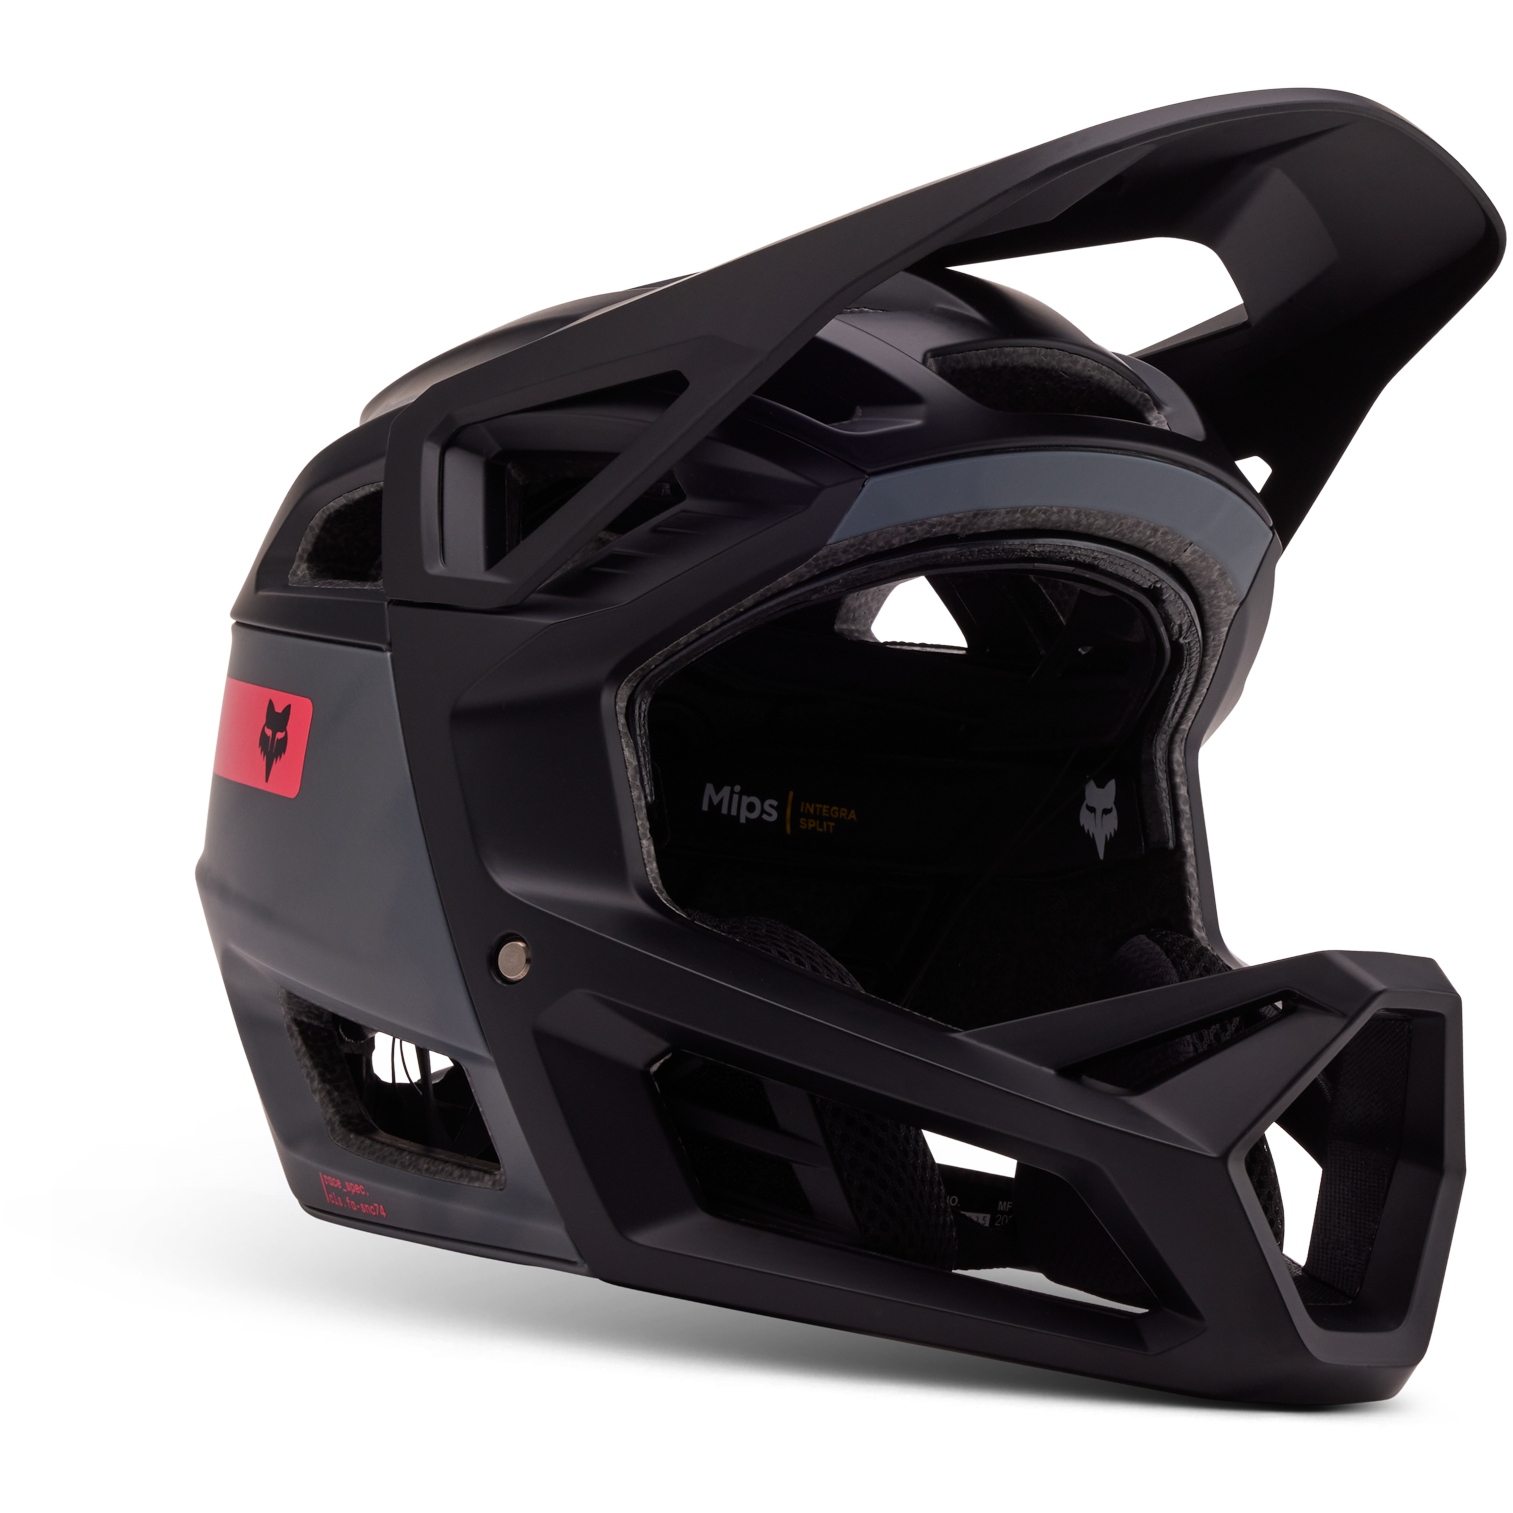 Productfoto van FOX Proframe RS Full Face Helm - Taunt - zwart